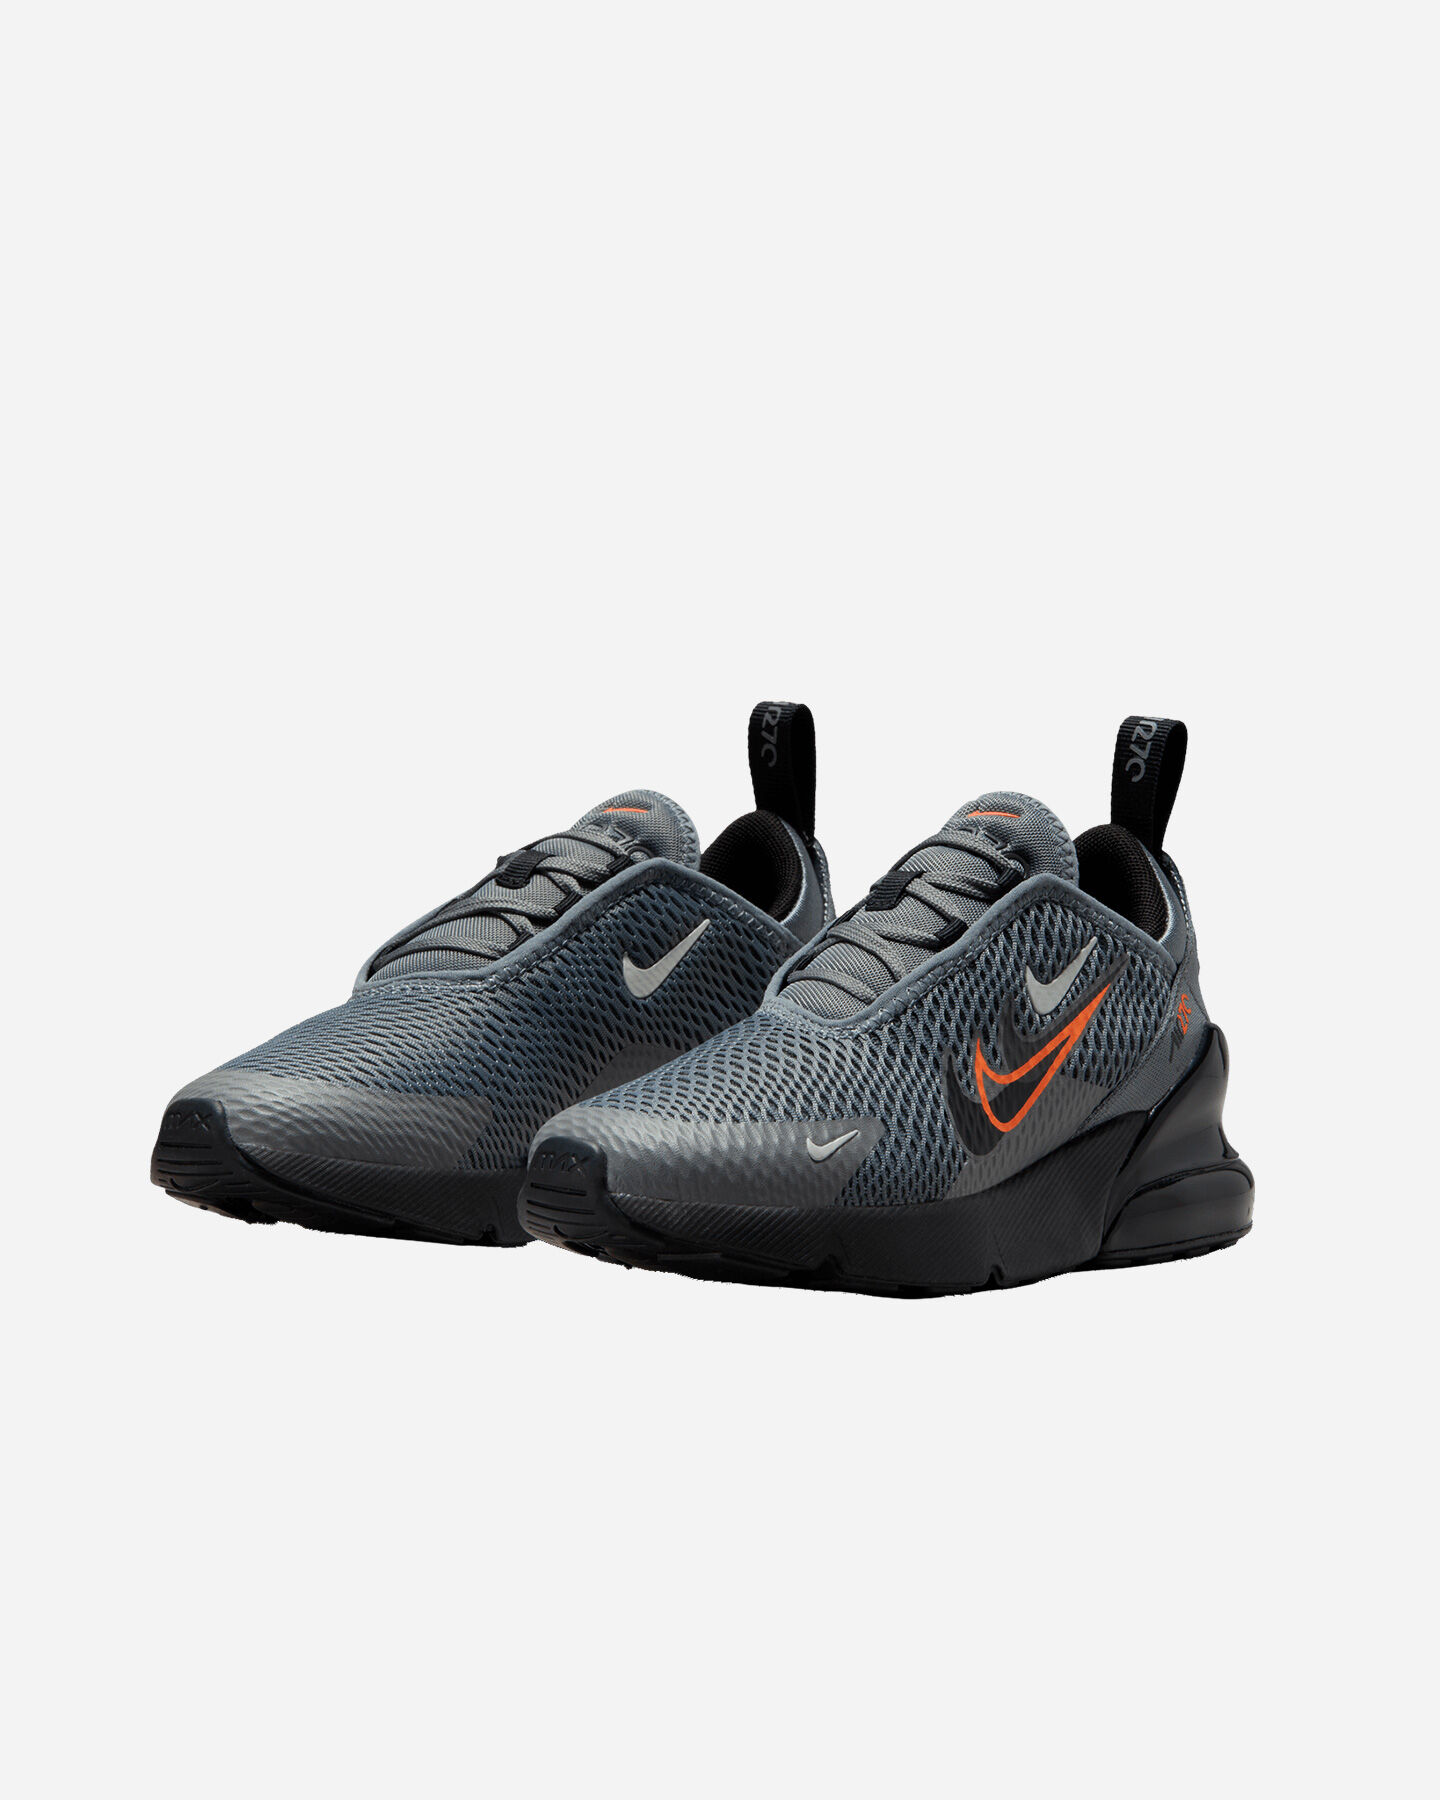  Scarpe sneakers NIKE AIR MAX 270 PS JR S5599902|001|12.5C scatto 1